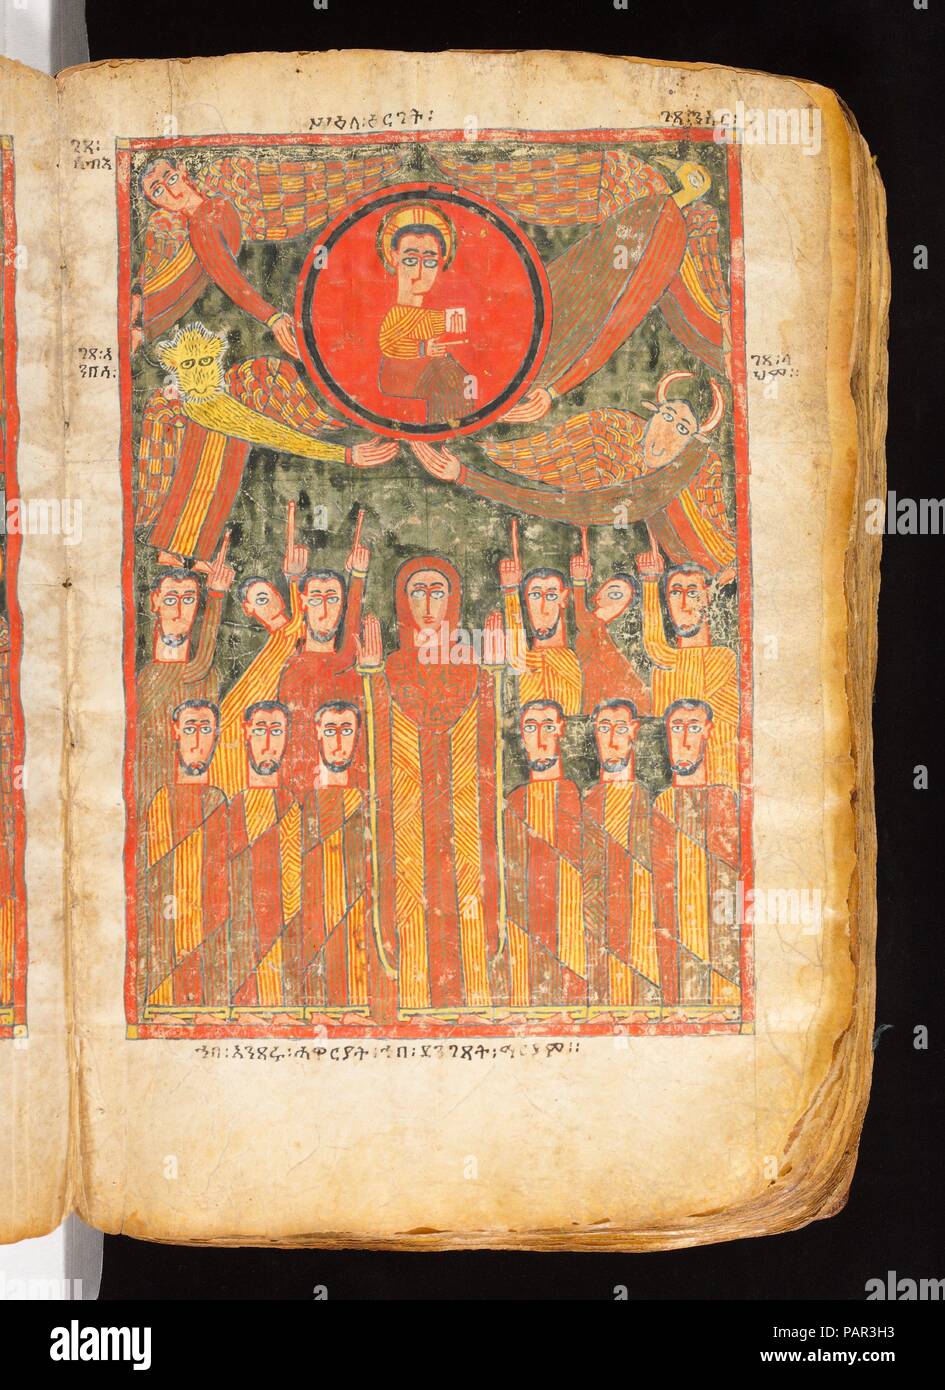 Byzantine manuscript jesus hi-res stock photography and images - Alamy